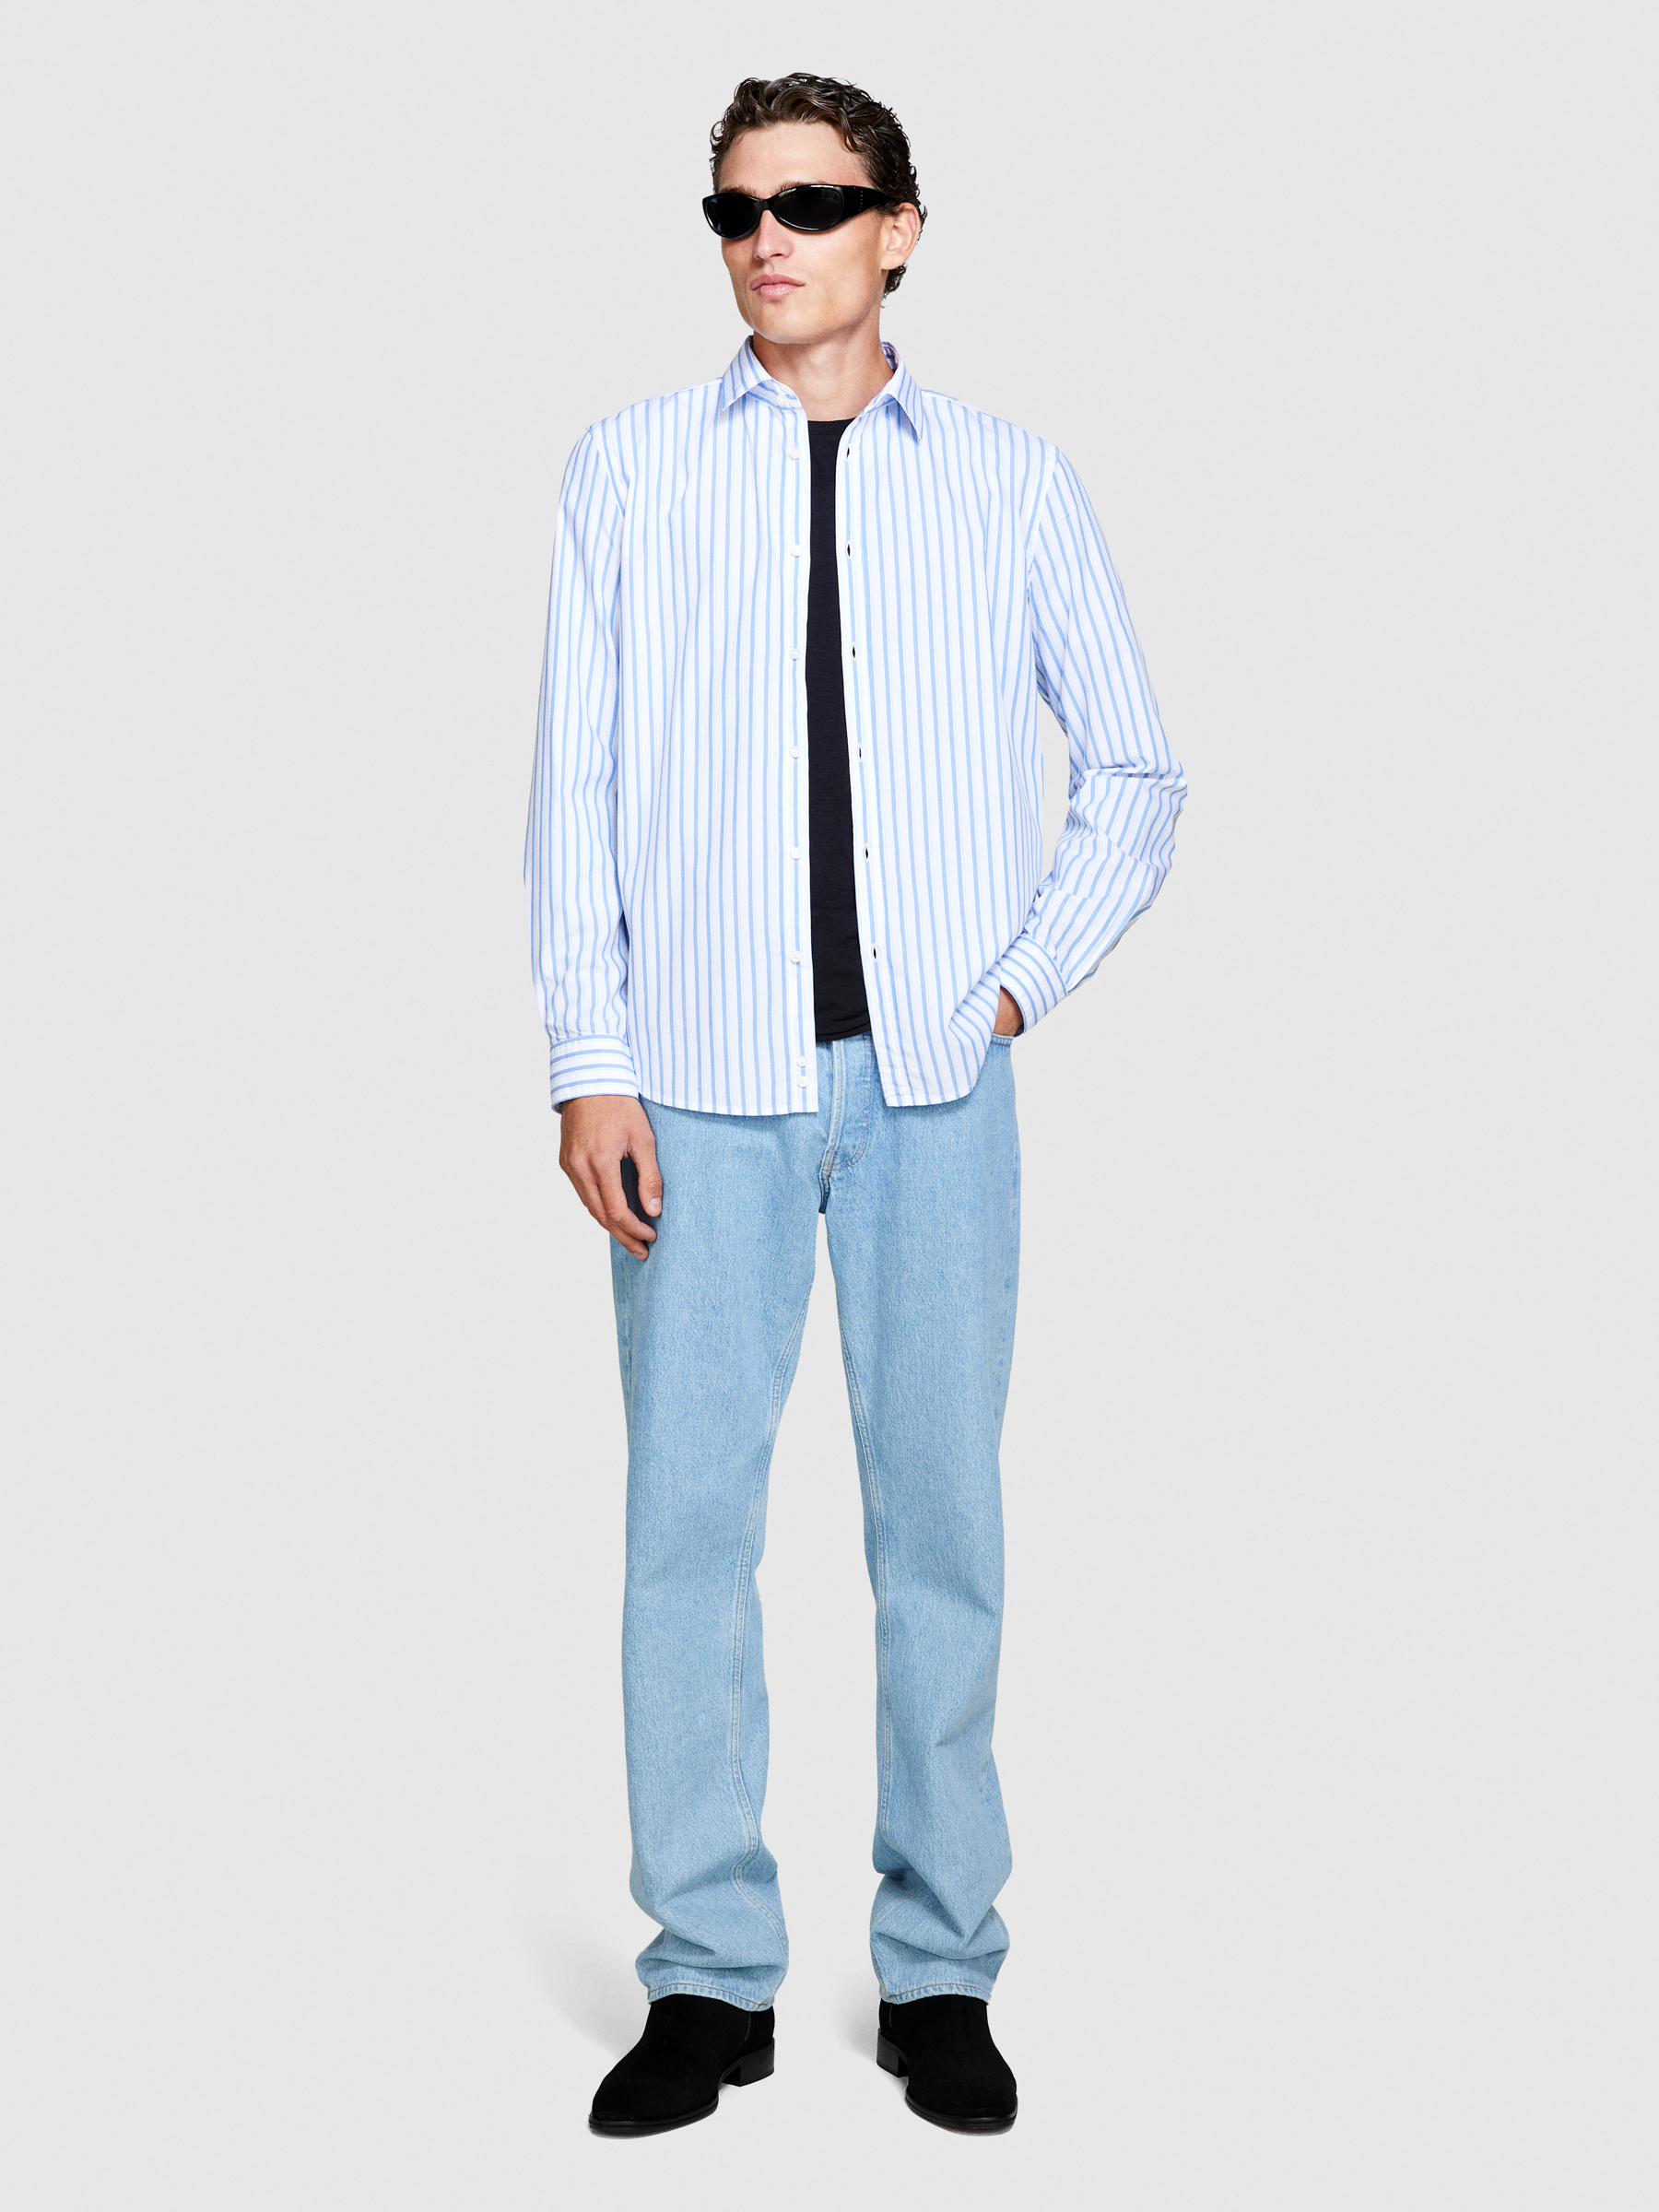 Sisley - Striped Shirt, Man, Light Blue, Size: 42